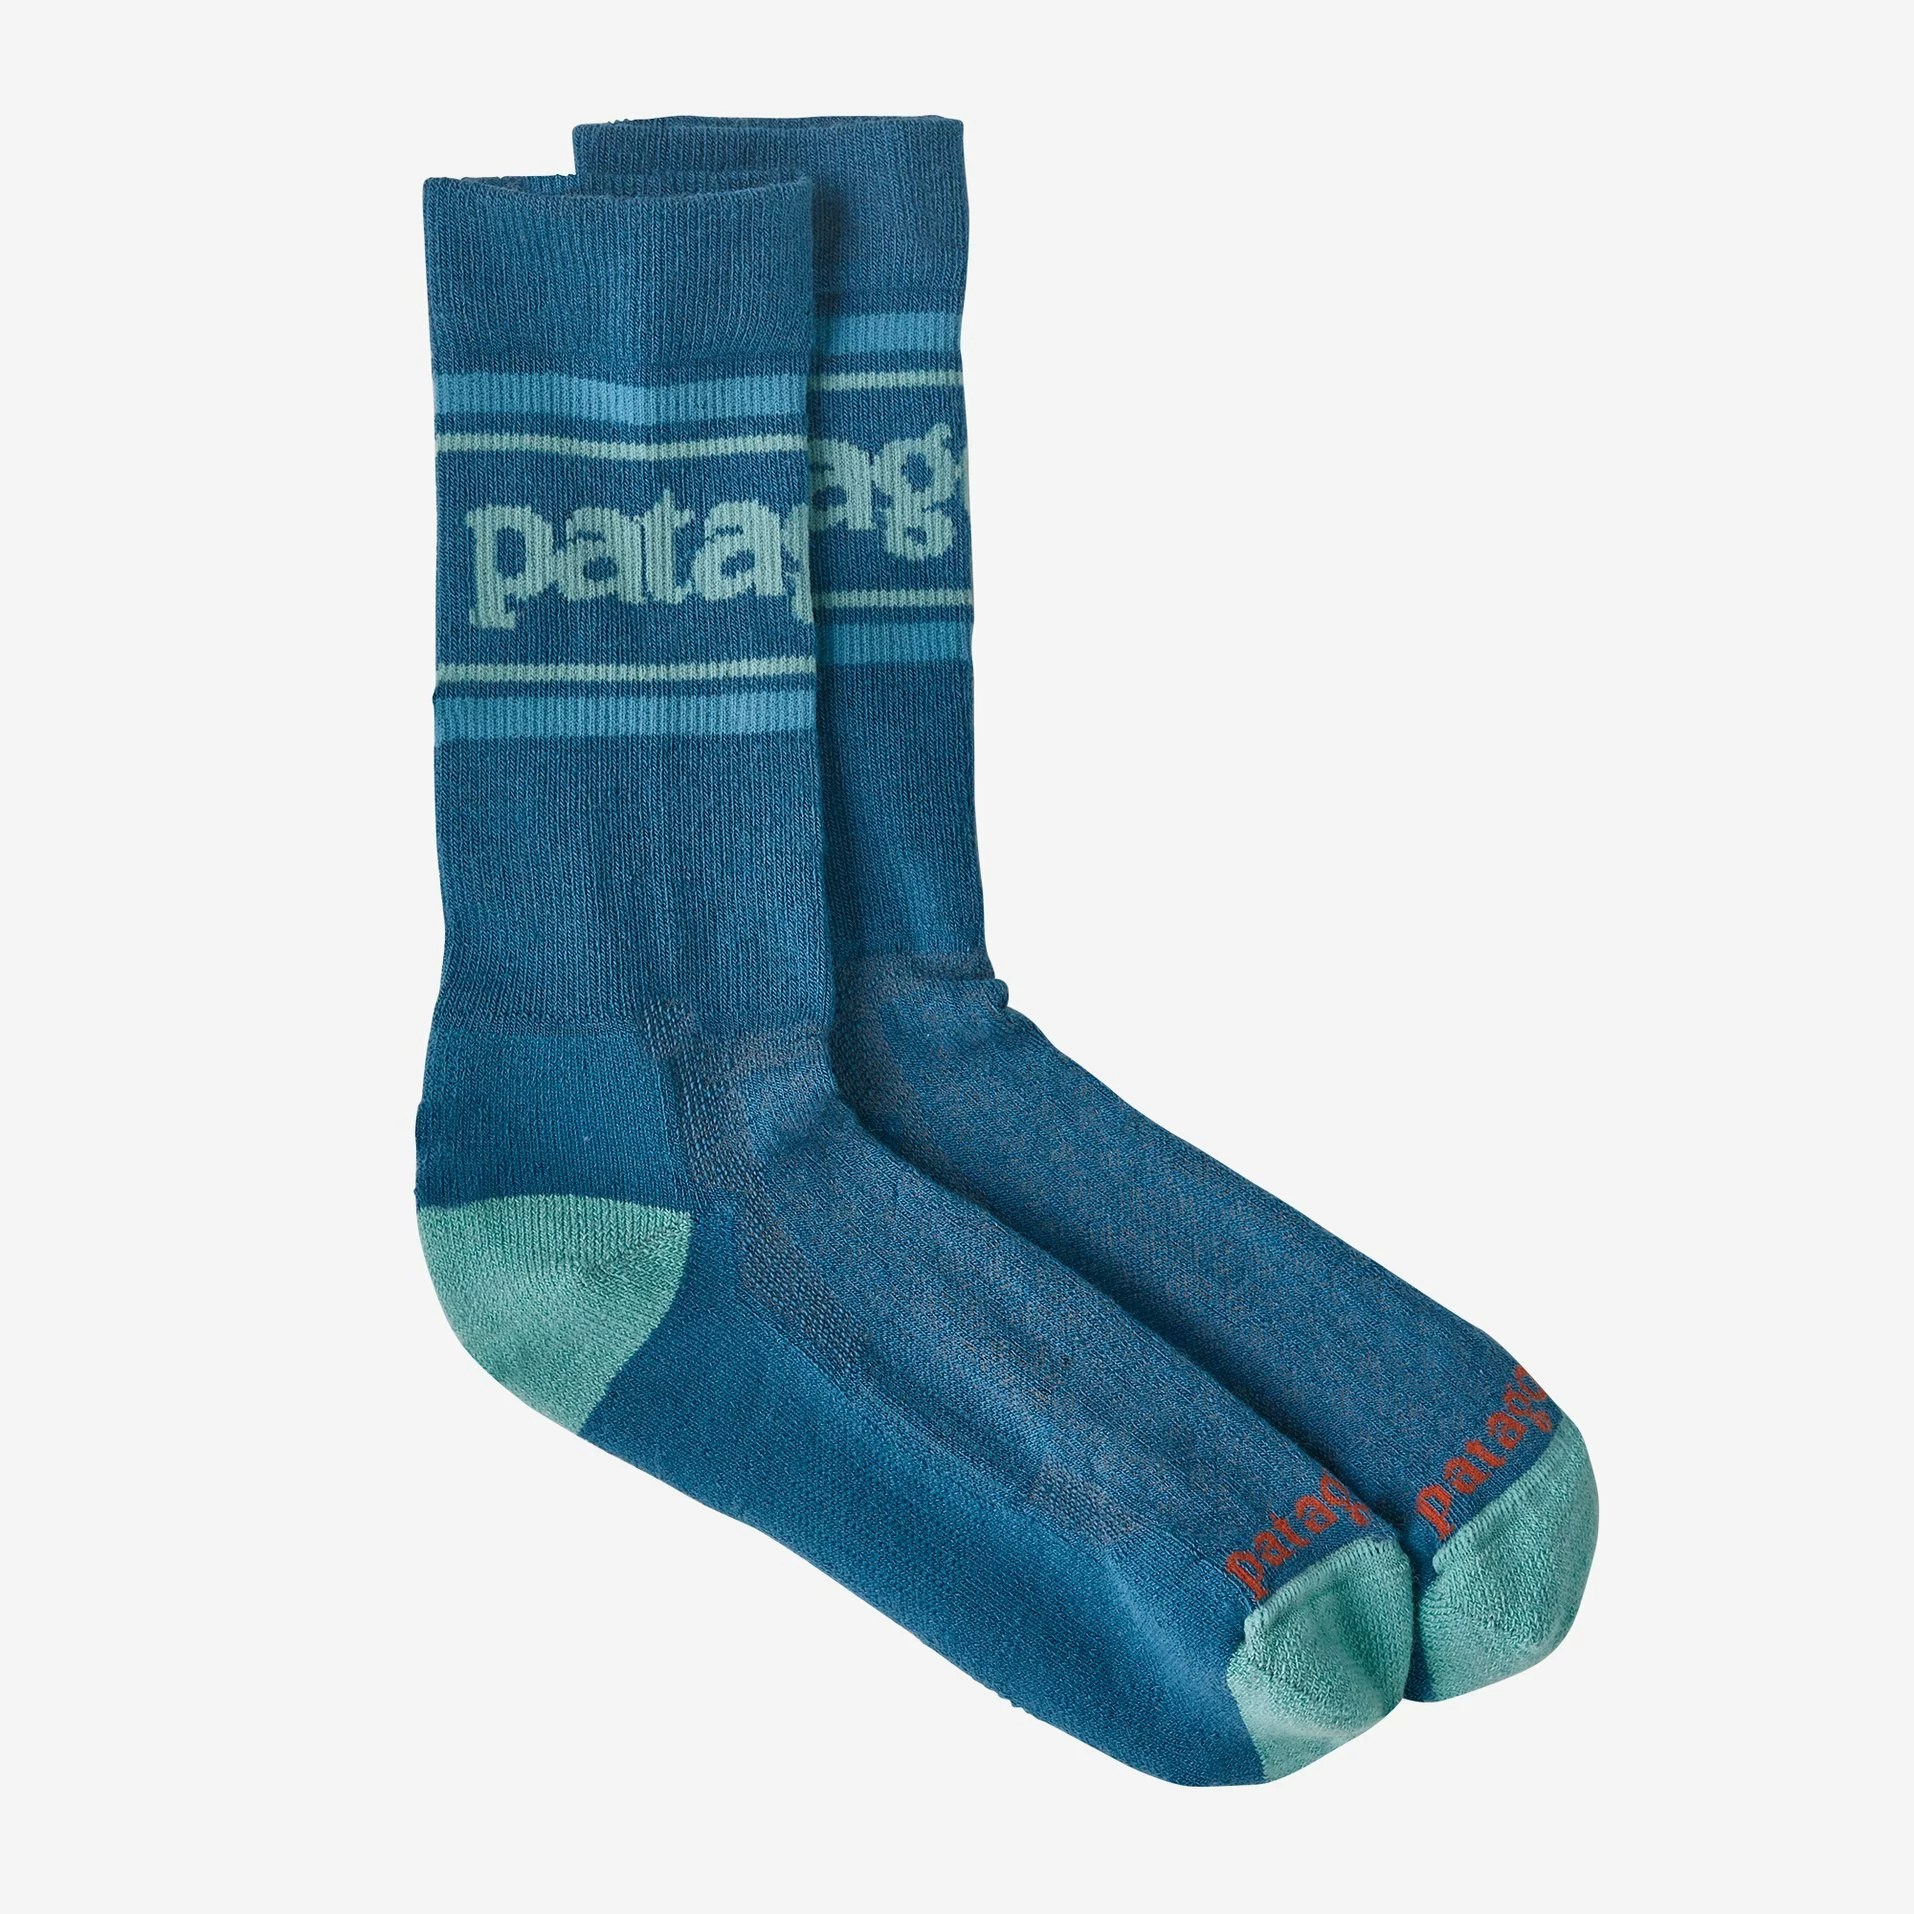 Patagonia, Lightweight Merino Performance Crew Socks